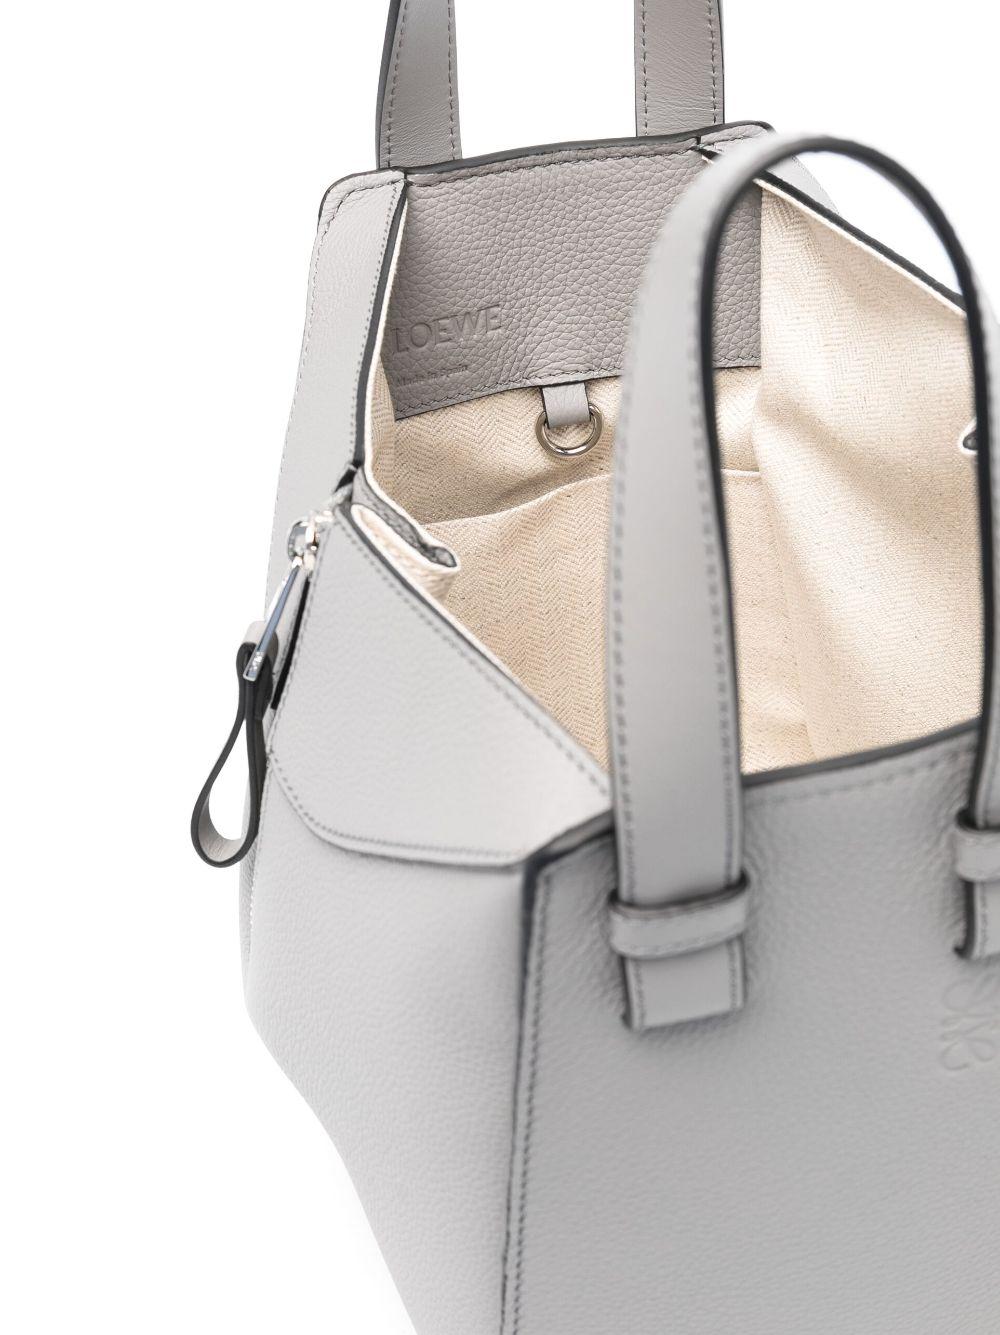 Hammock Compact Leather Tote Bag in Grey - Loewe